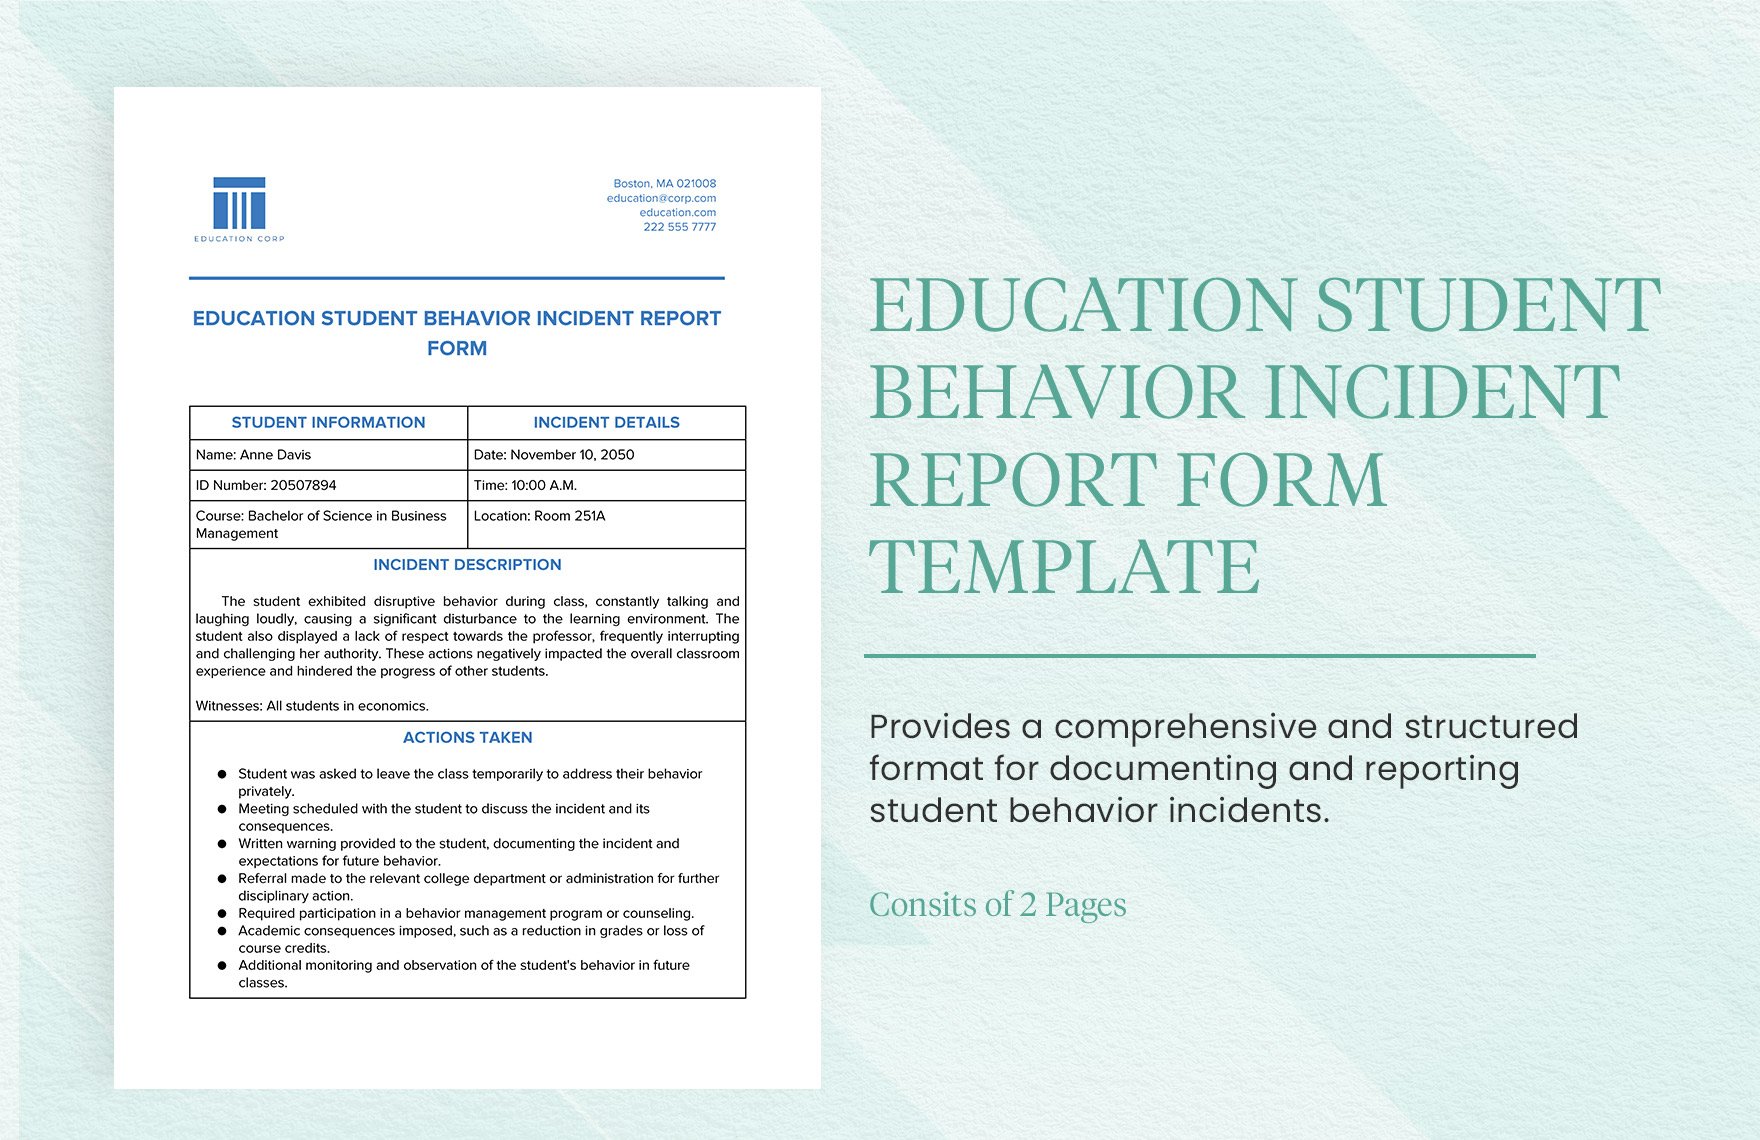 Education Student Behavior Incident Report Form Template